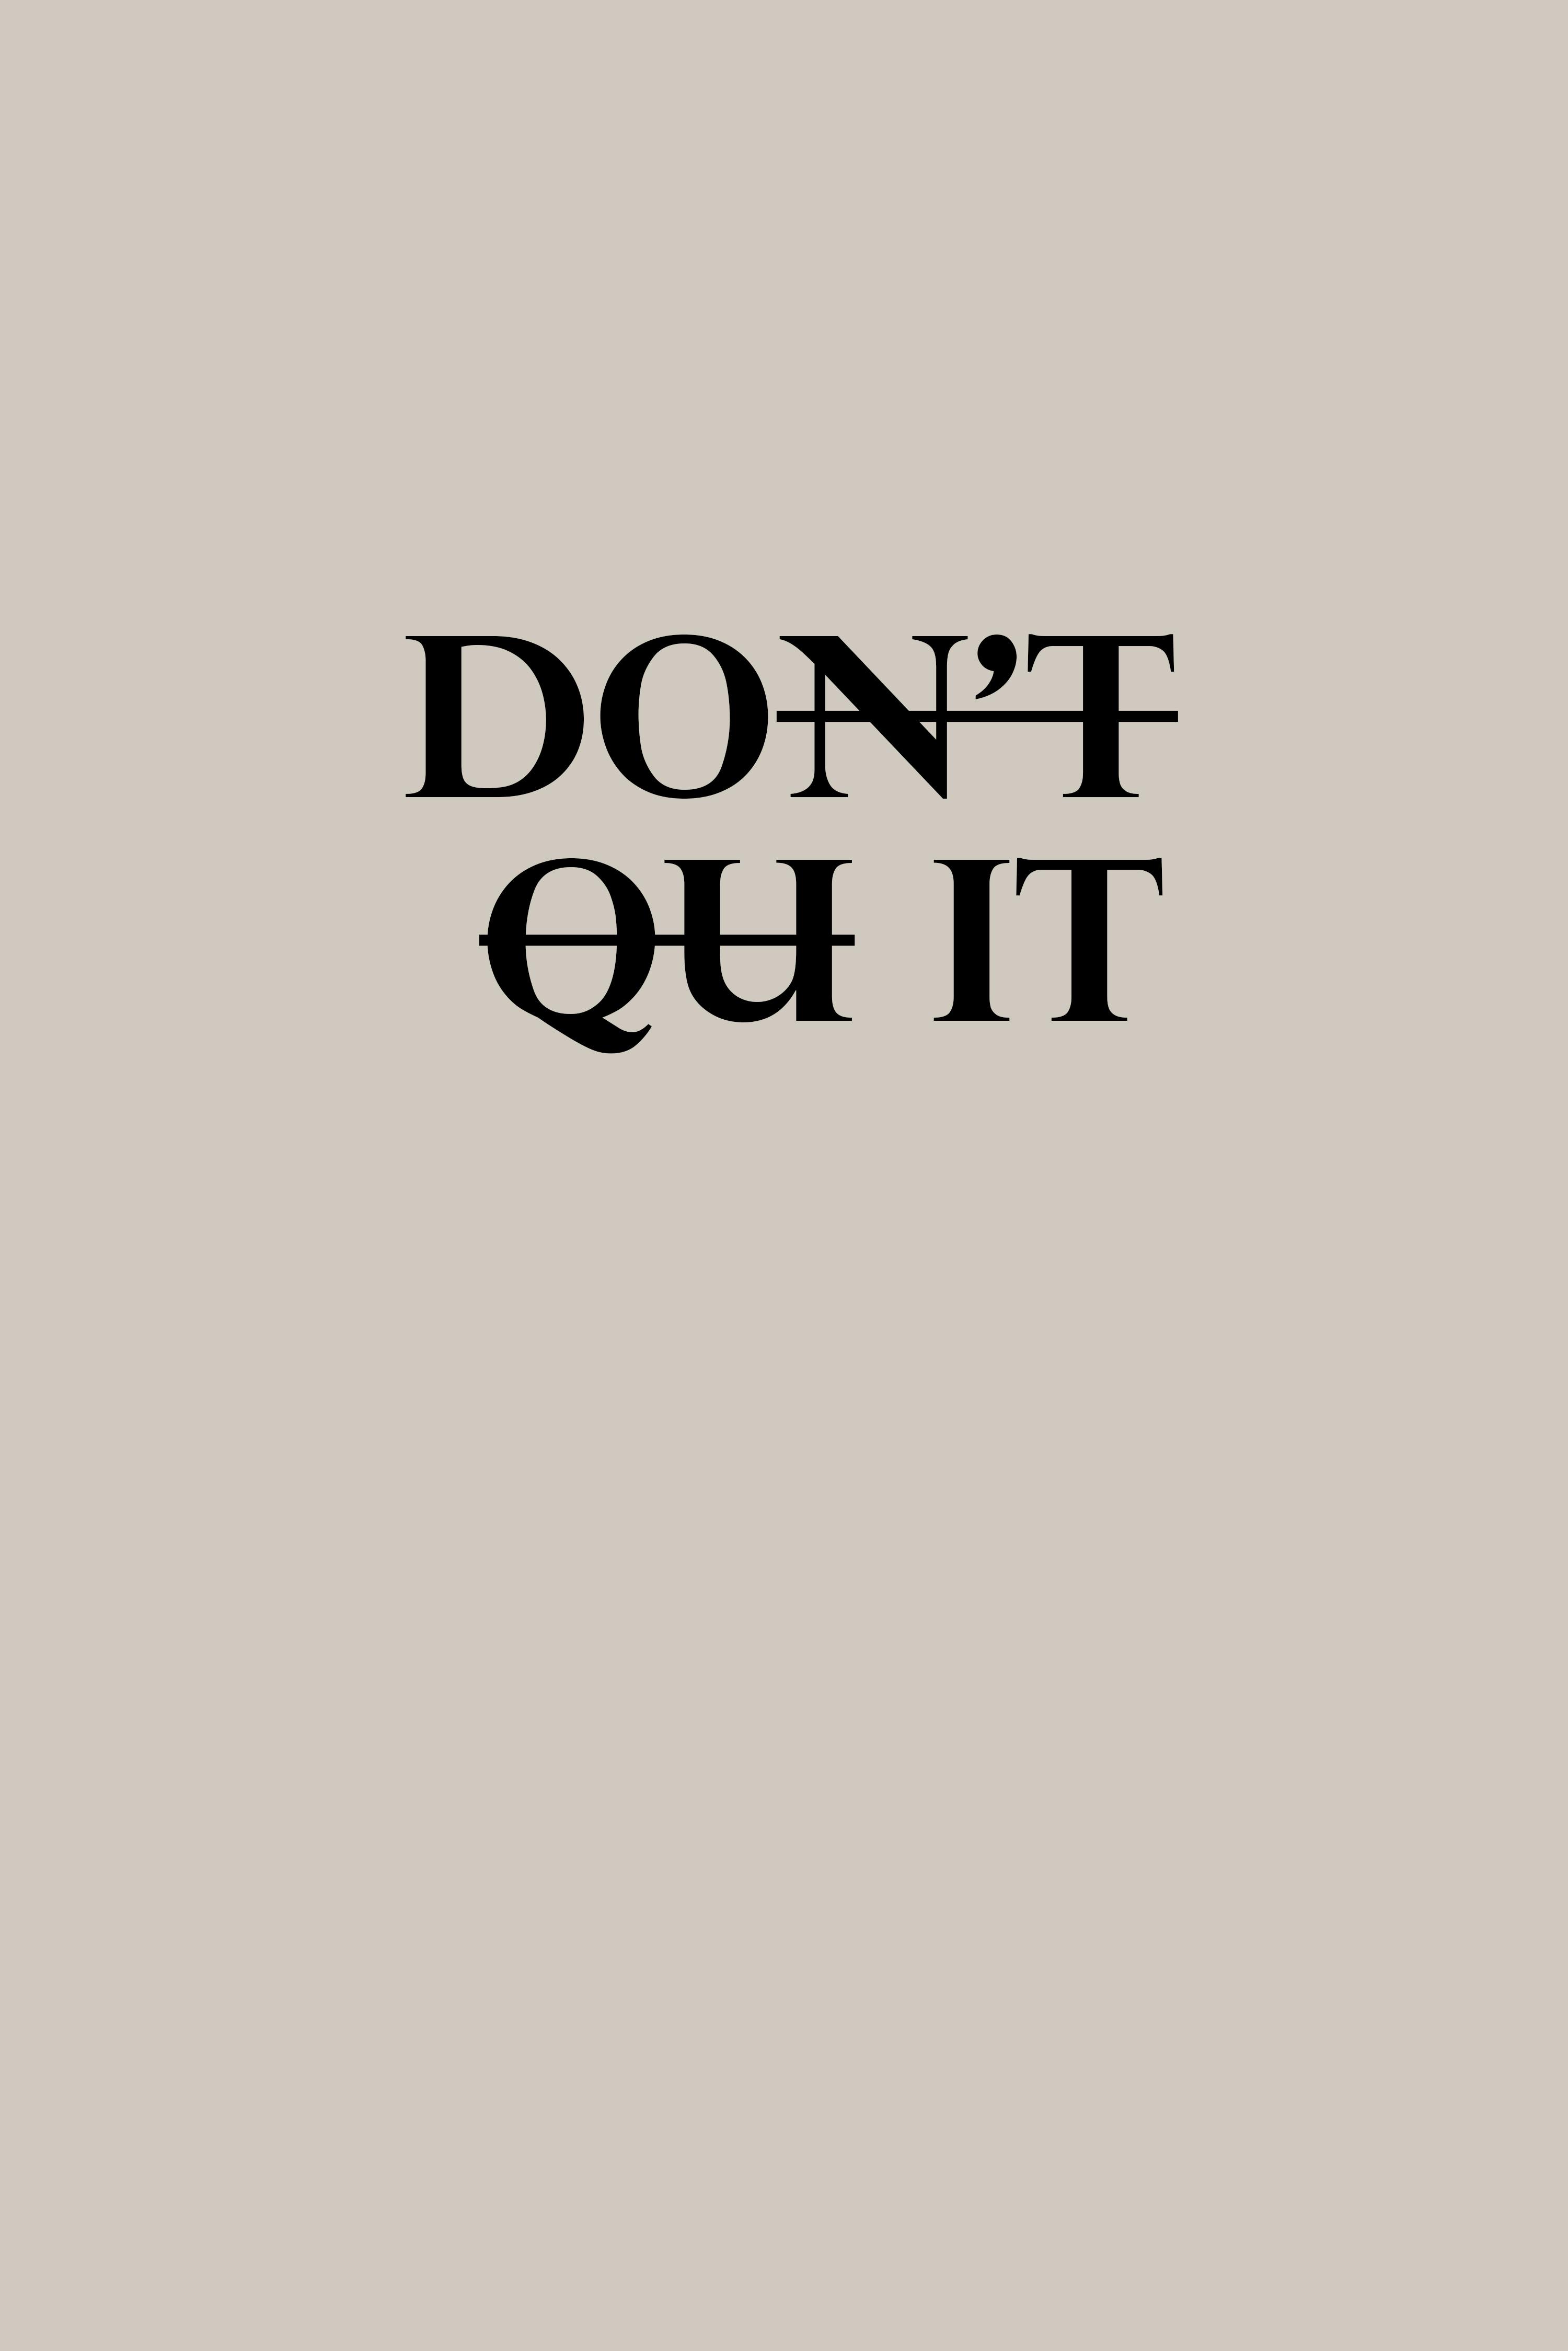 Dont Quit Motivational Wallpaper for Desktop  QuotationWalls